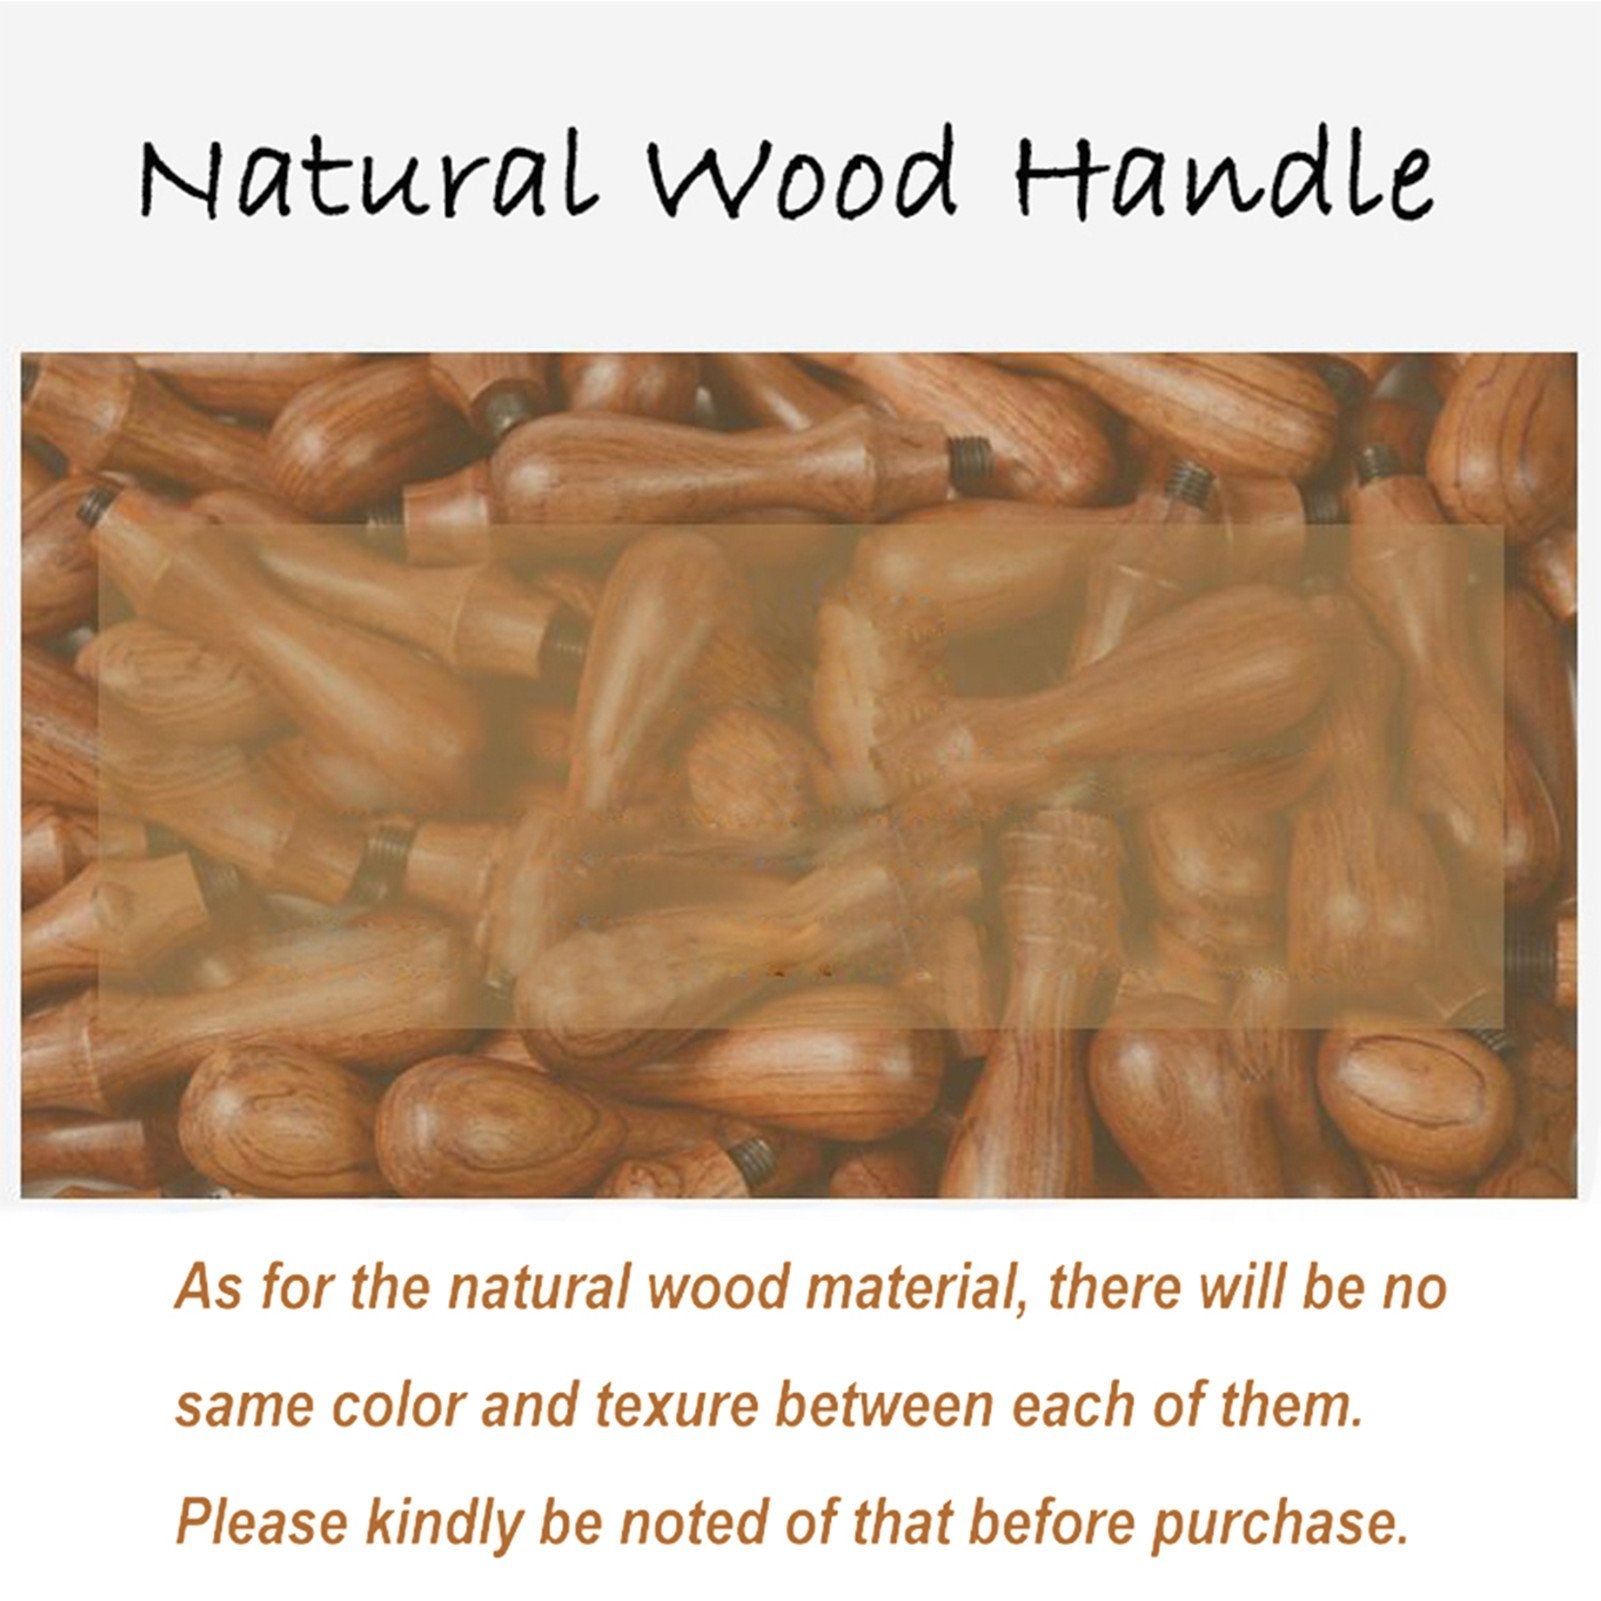 Word Good Luck Wood Handle Wax Seal Stamp